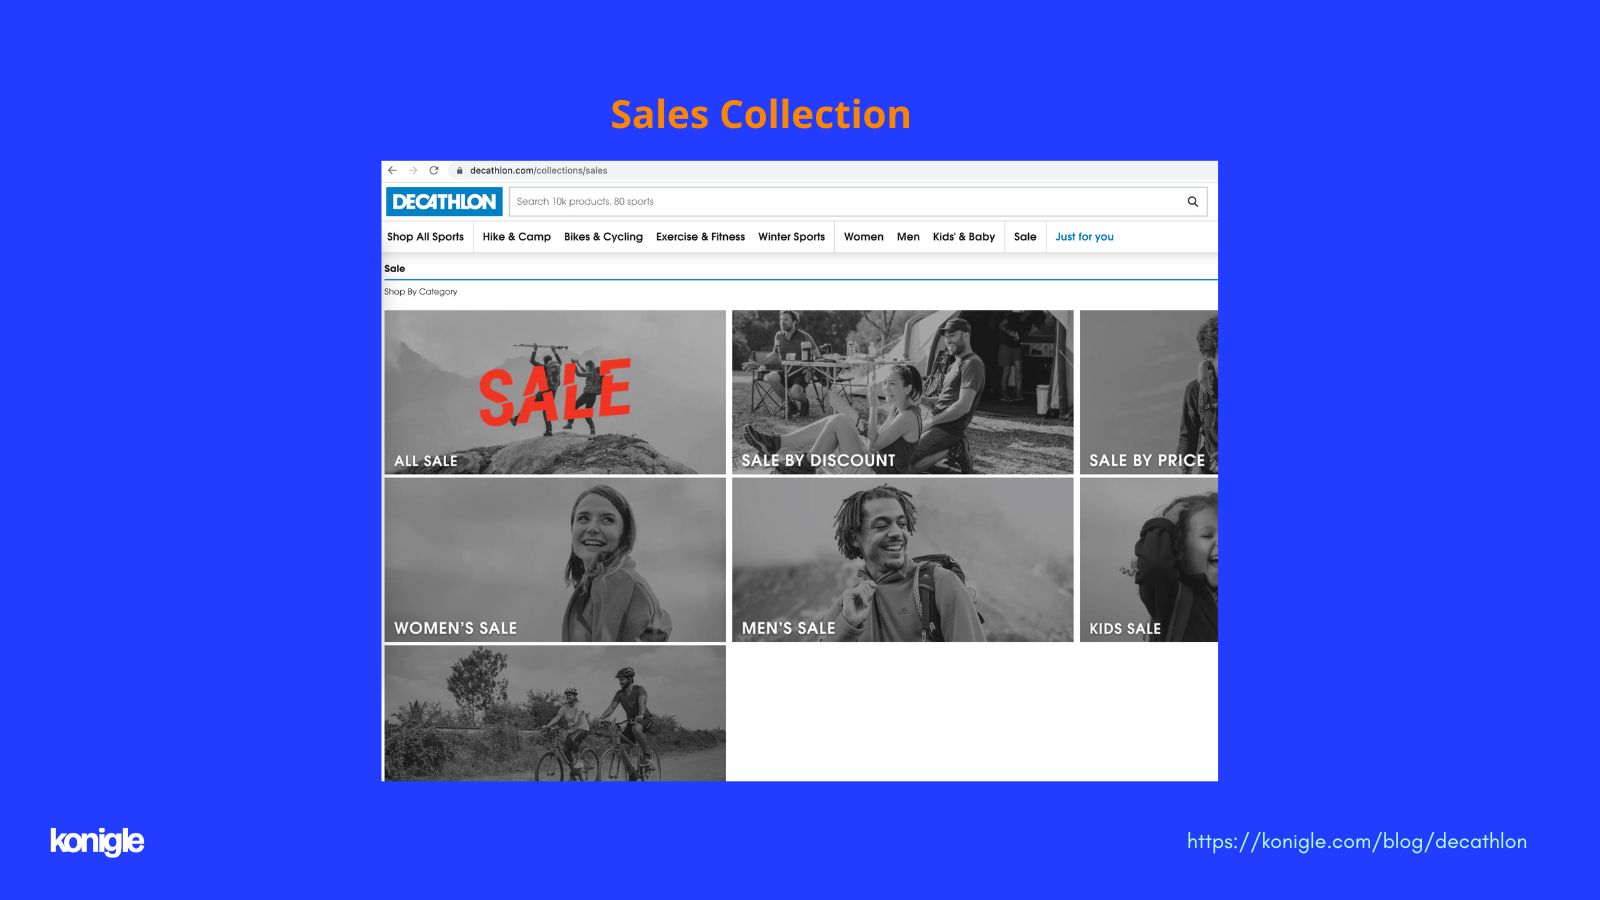 Decathlon has a dedicated Sales Collection Page